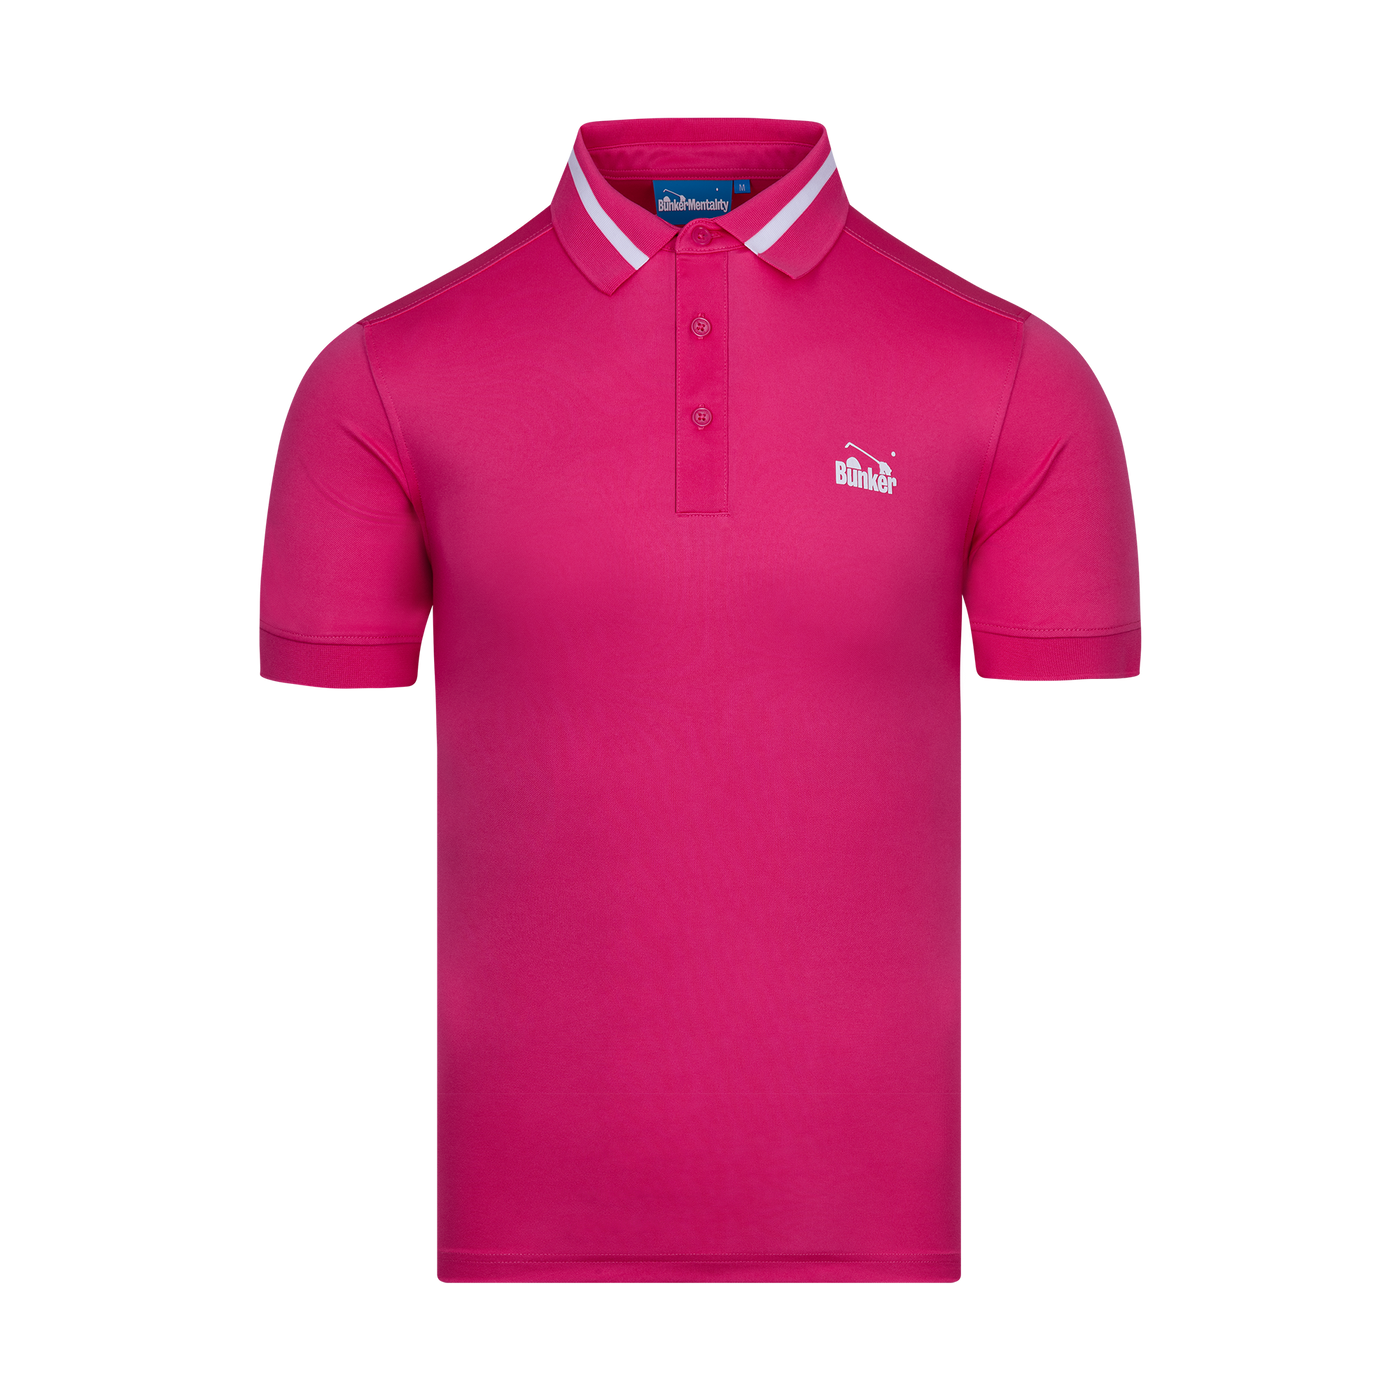 Bunker Mentality Logo Hot Pink Golf Shirt | Golf Polo Shirts & Tops